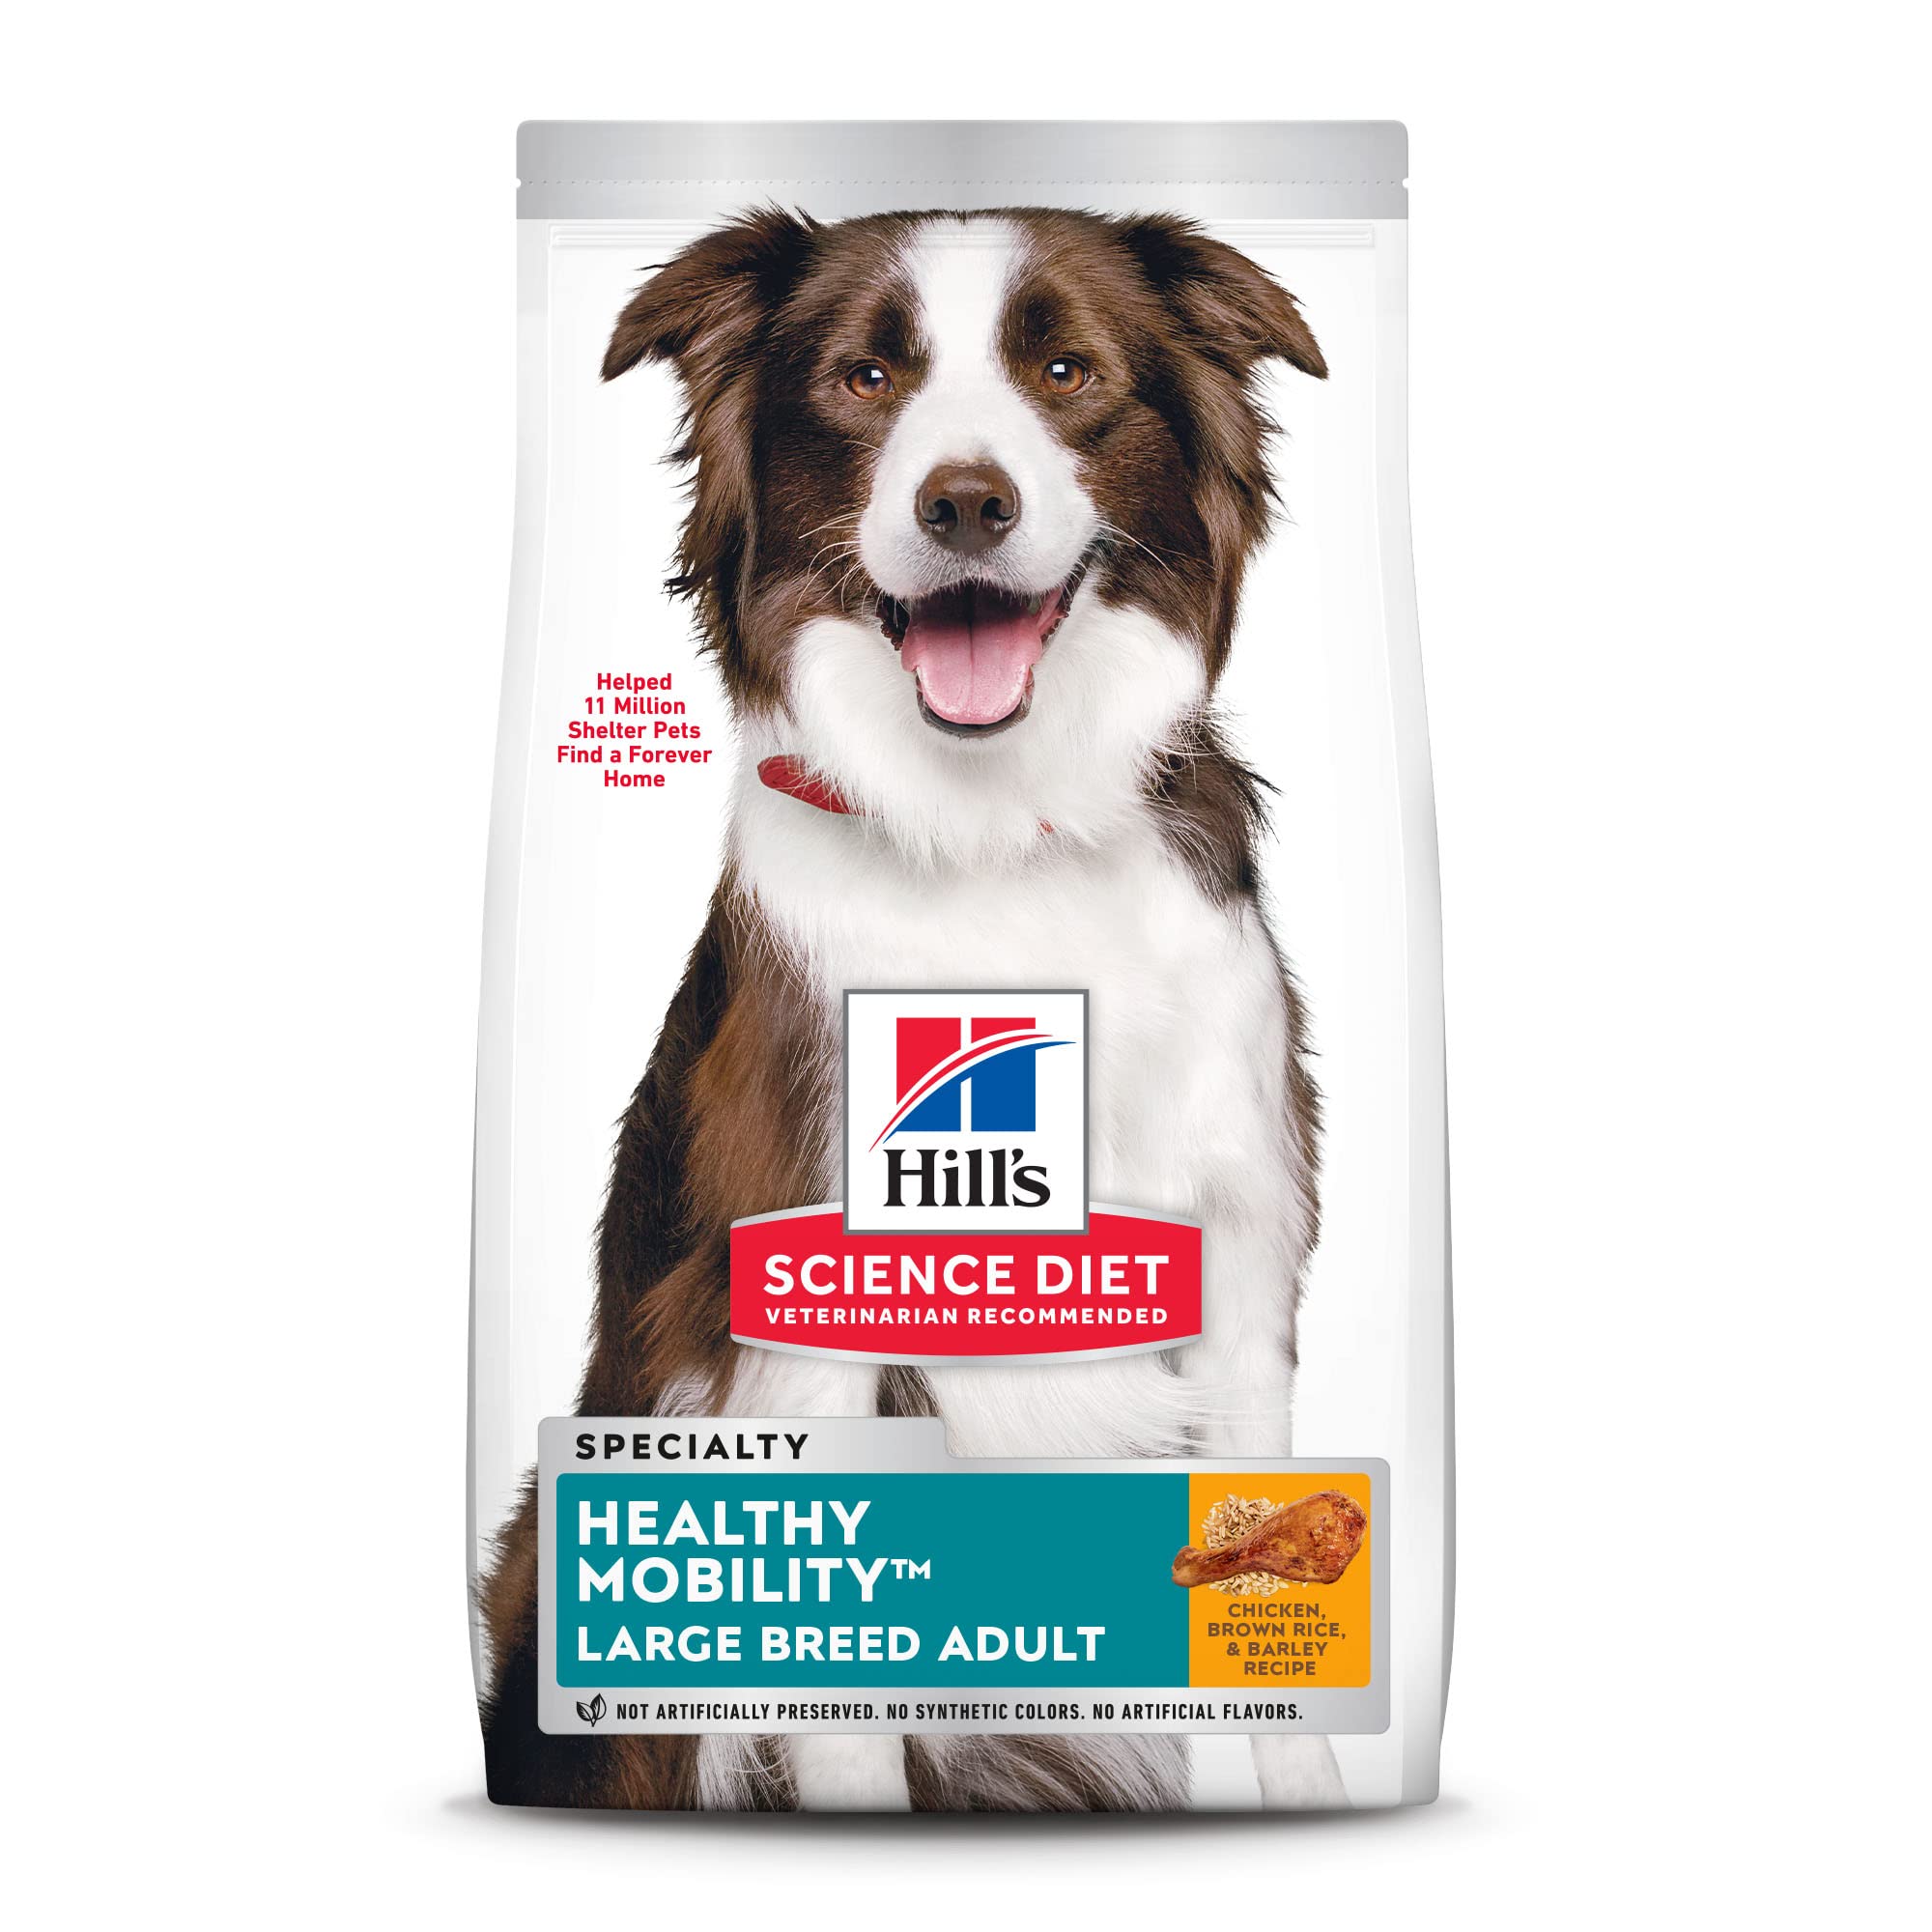 Hill's Science Diet ドライドッグフード、アダルト、大型犬用、関節の健康のための健康的な運動、チキンミール、玄米と大麦のレシピ、30ポンド袋